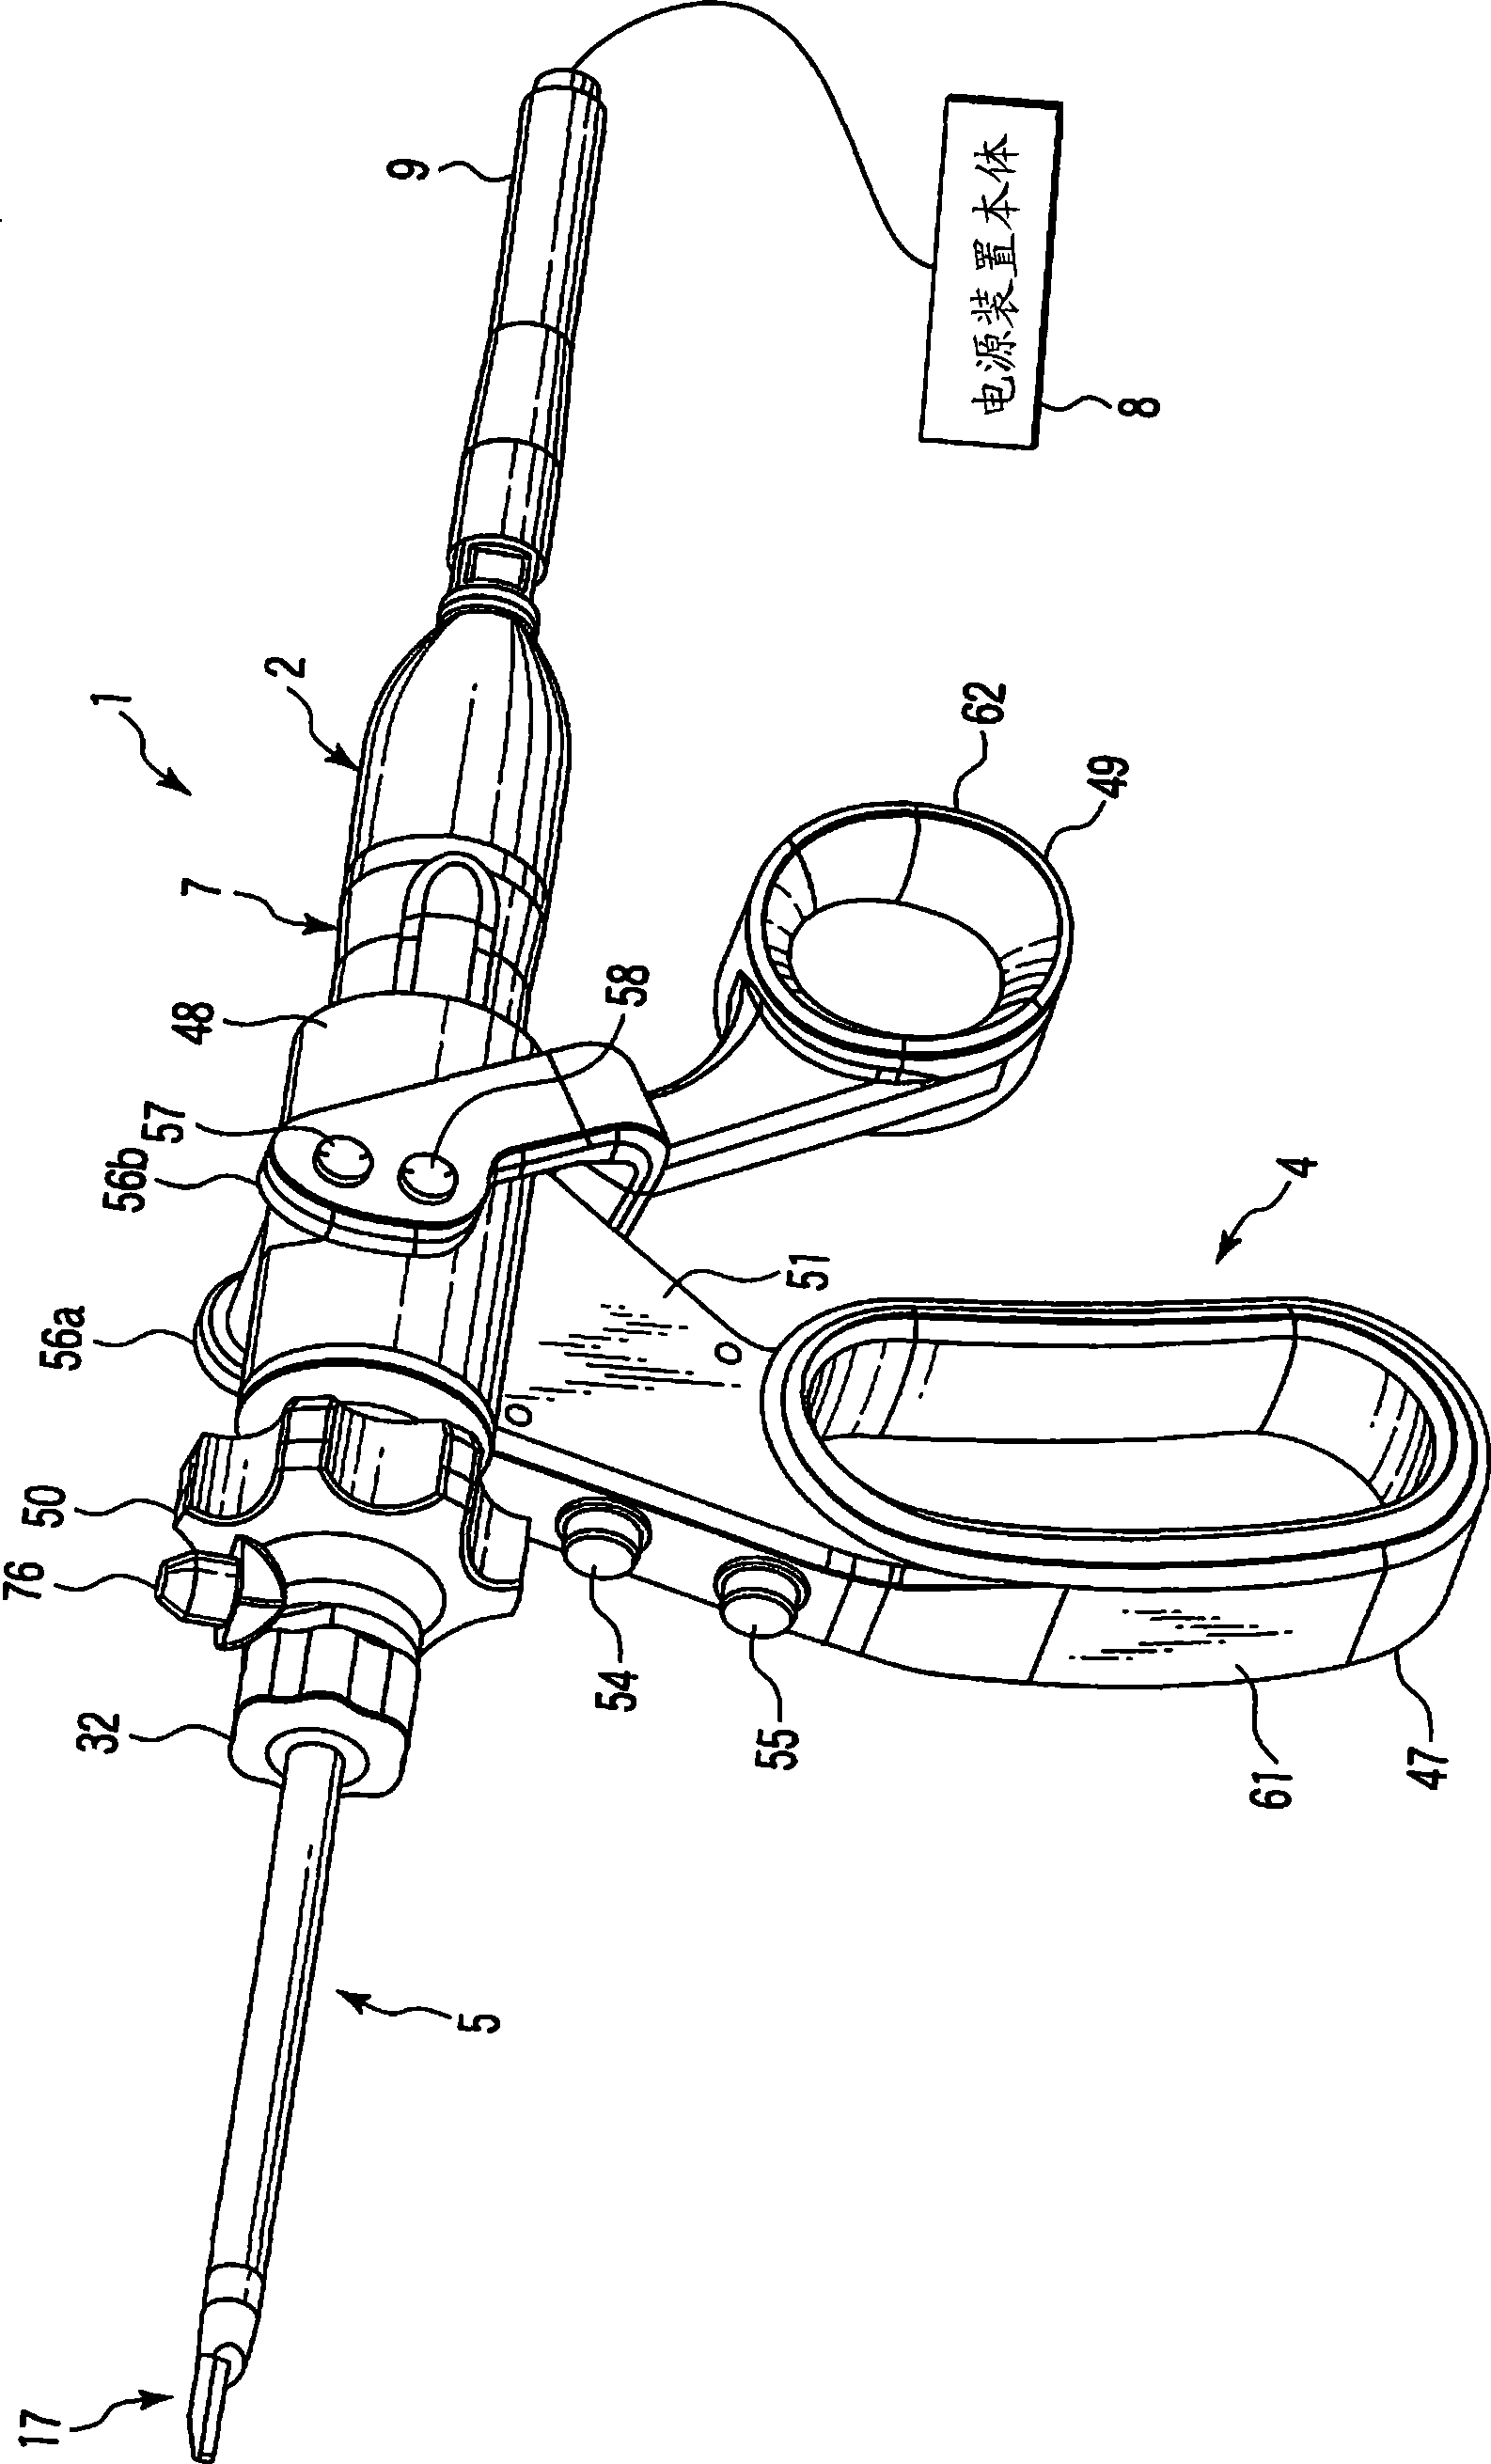 Ultrasonic operating apparatus